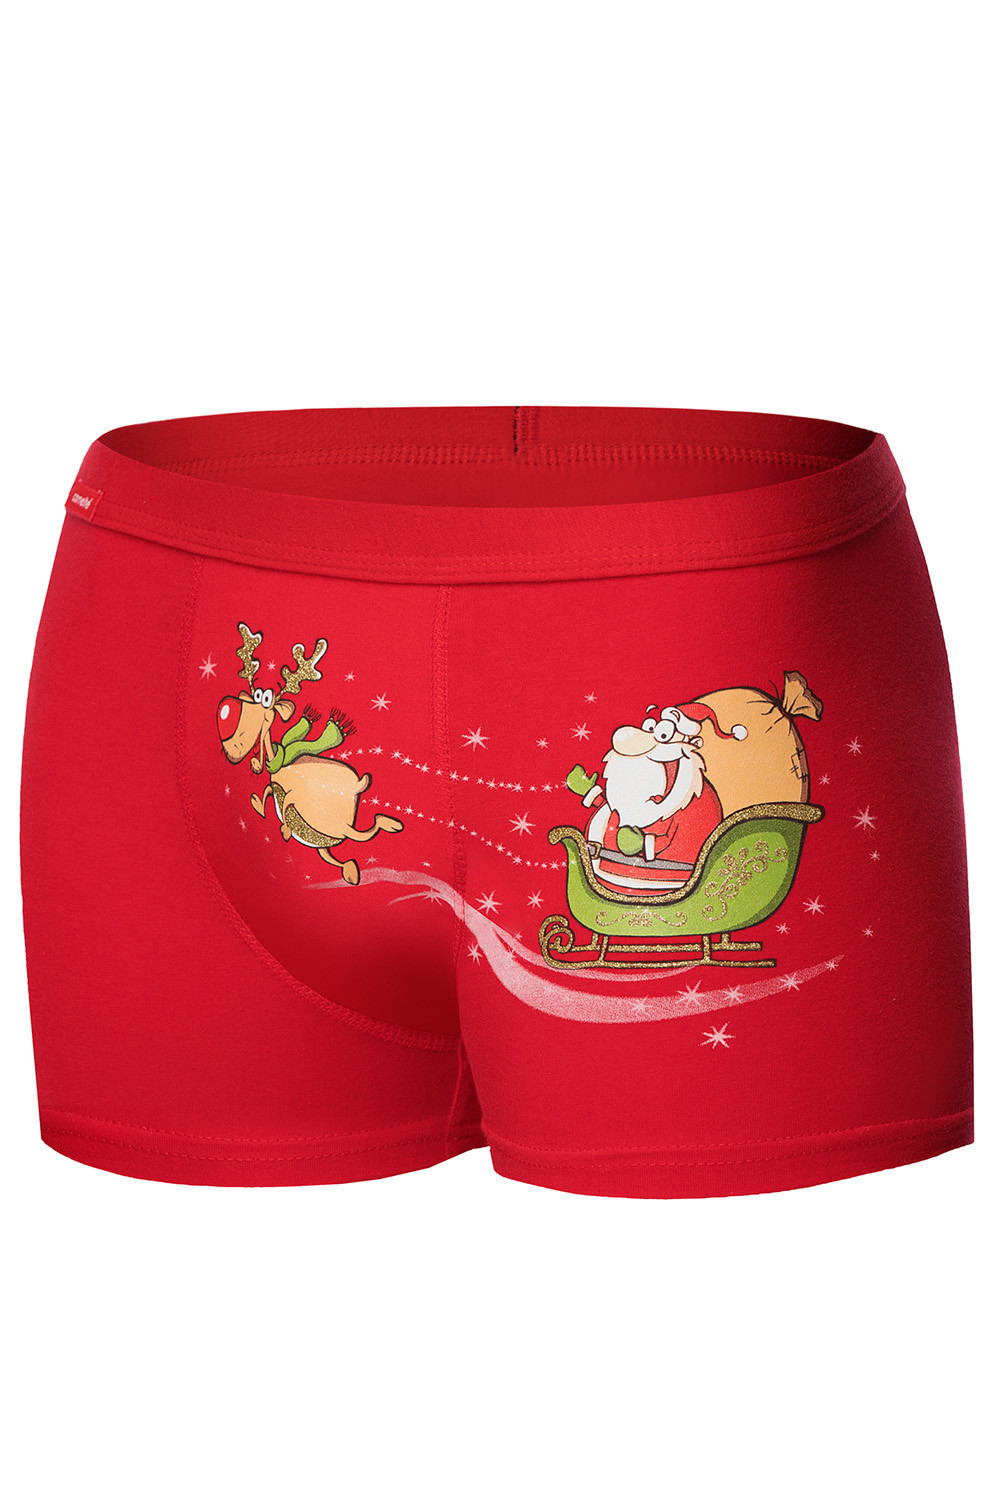 Pánské boxerky Santa's sleigh 007/67 červené - Cornette XXL